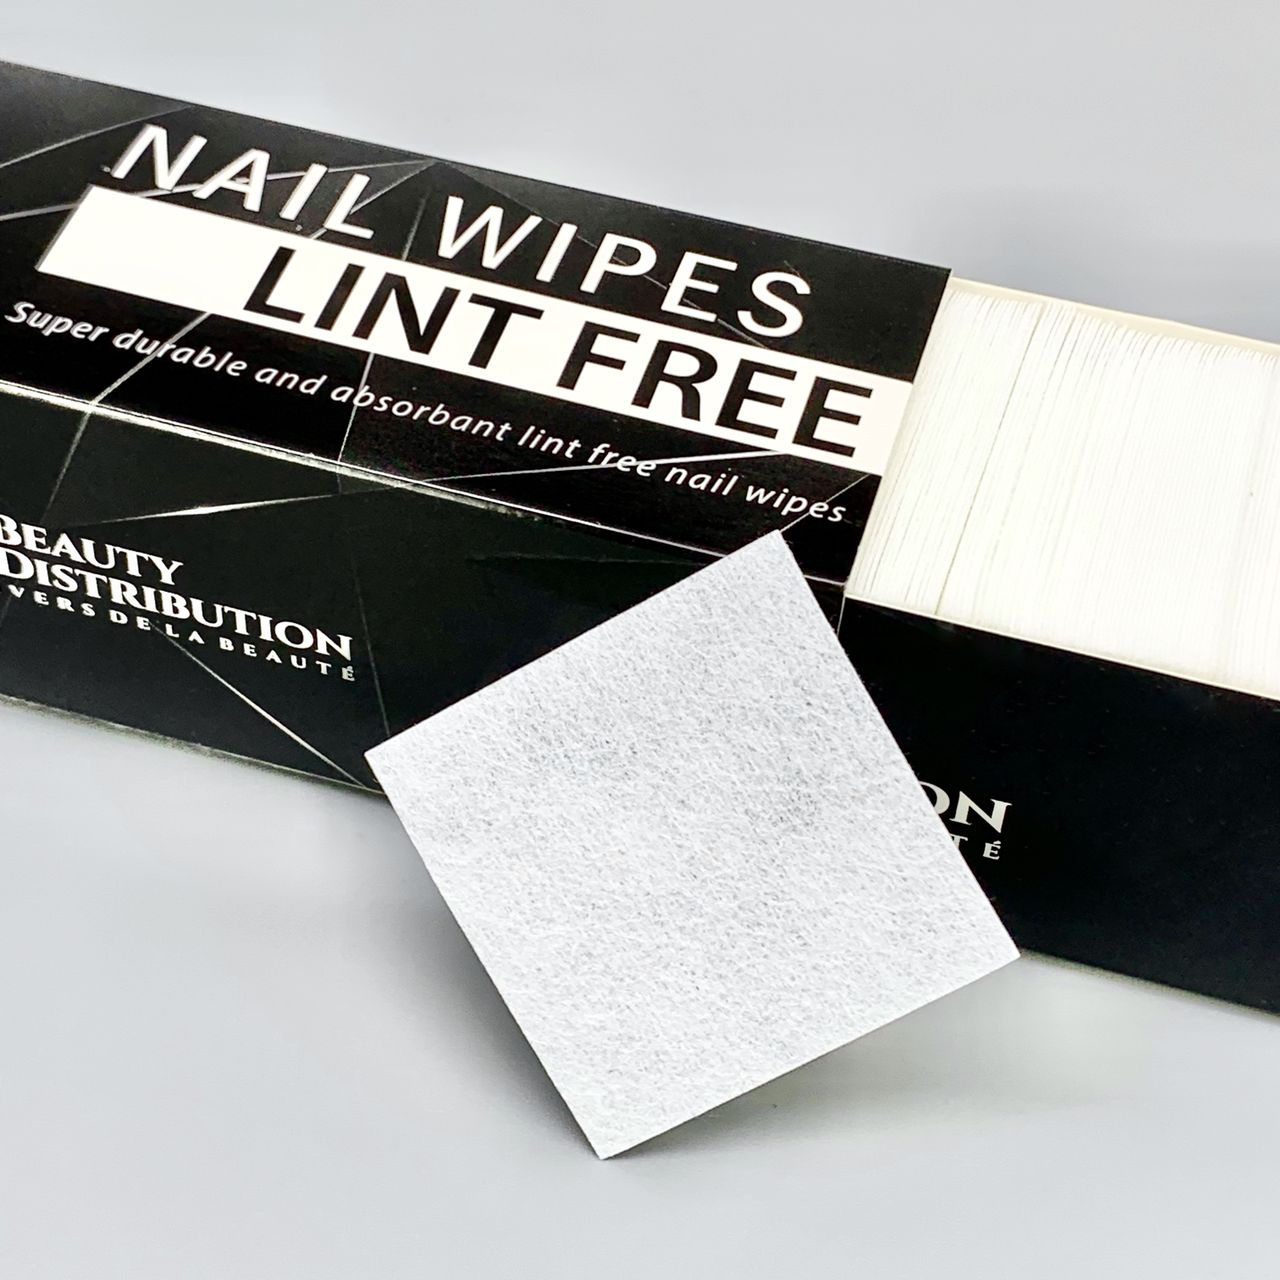 Nail wipes cotton BEAUTY DISTRIBUTION